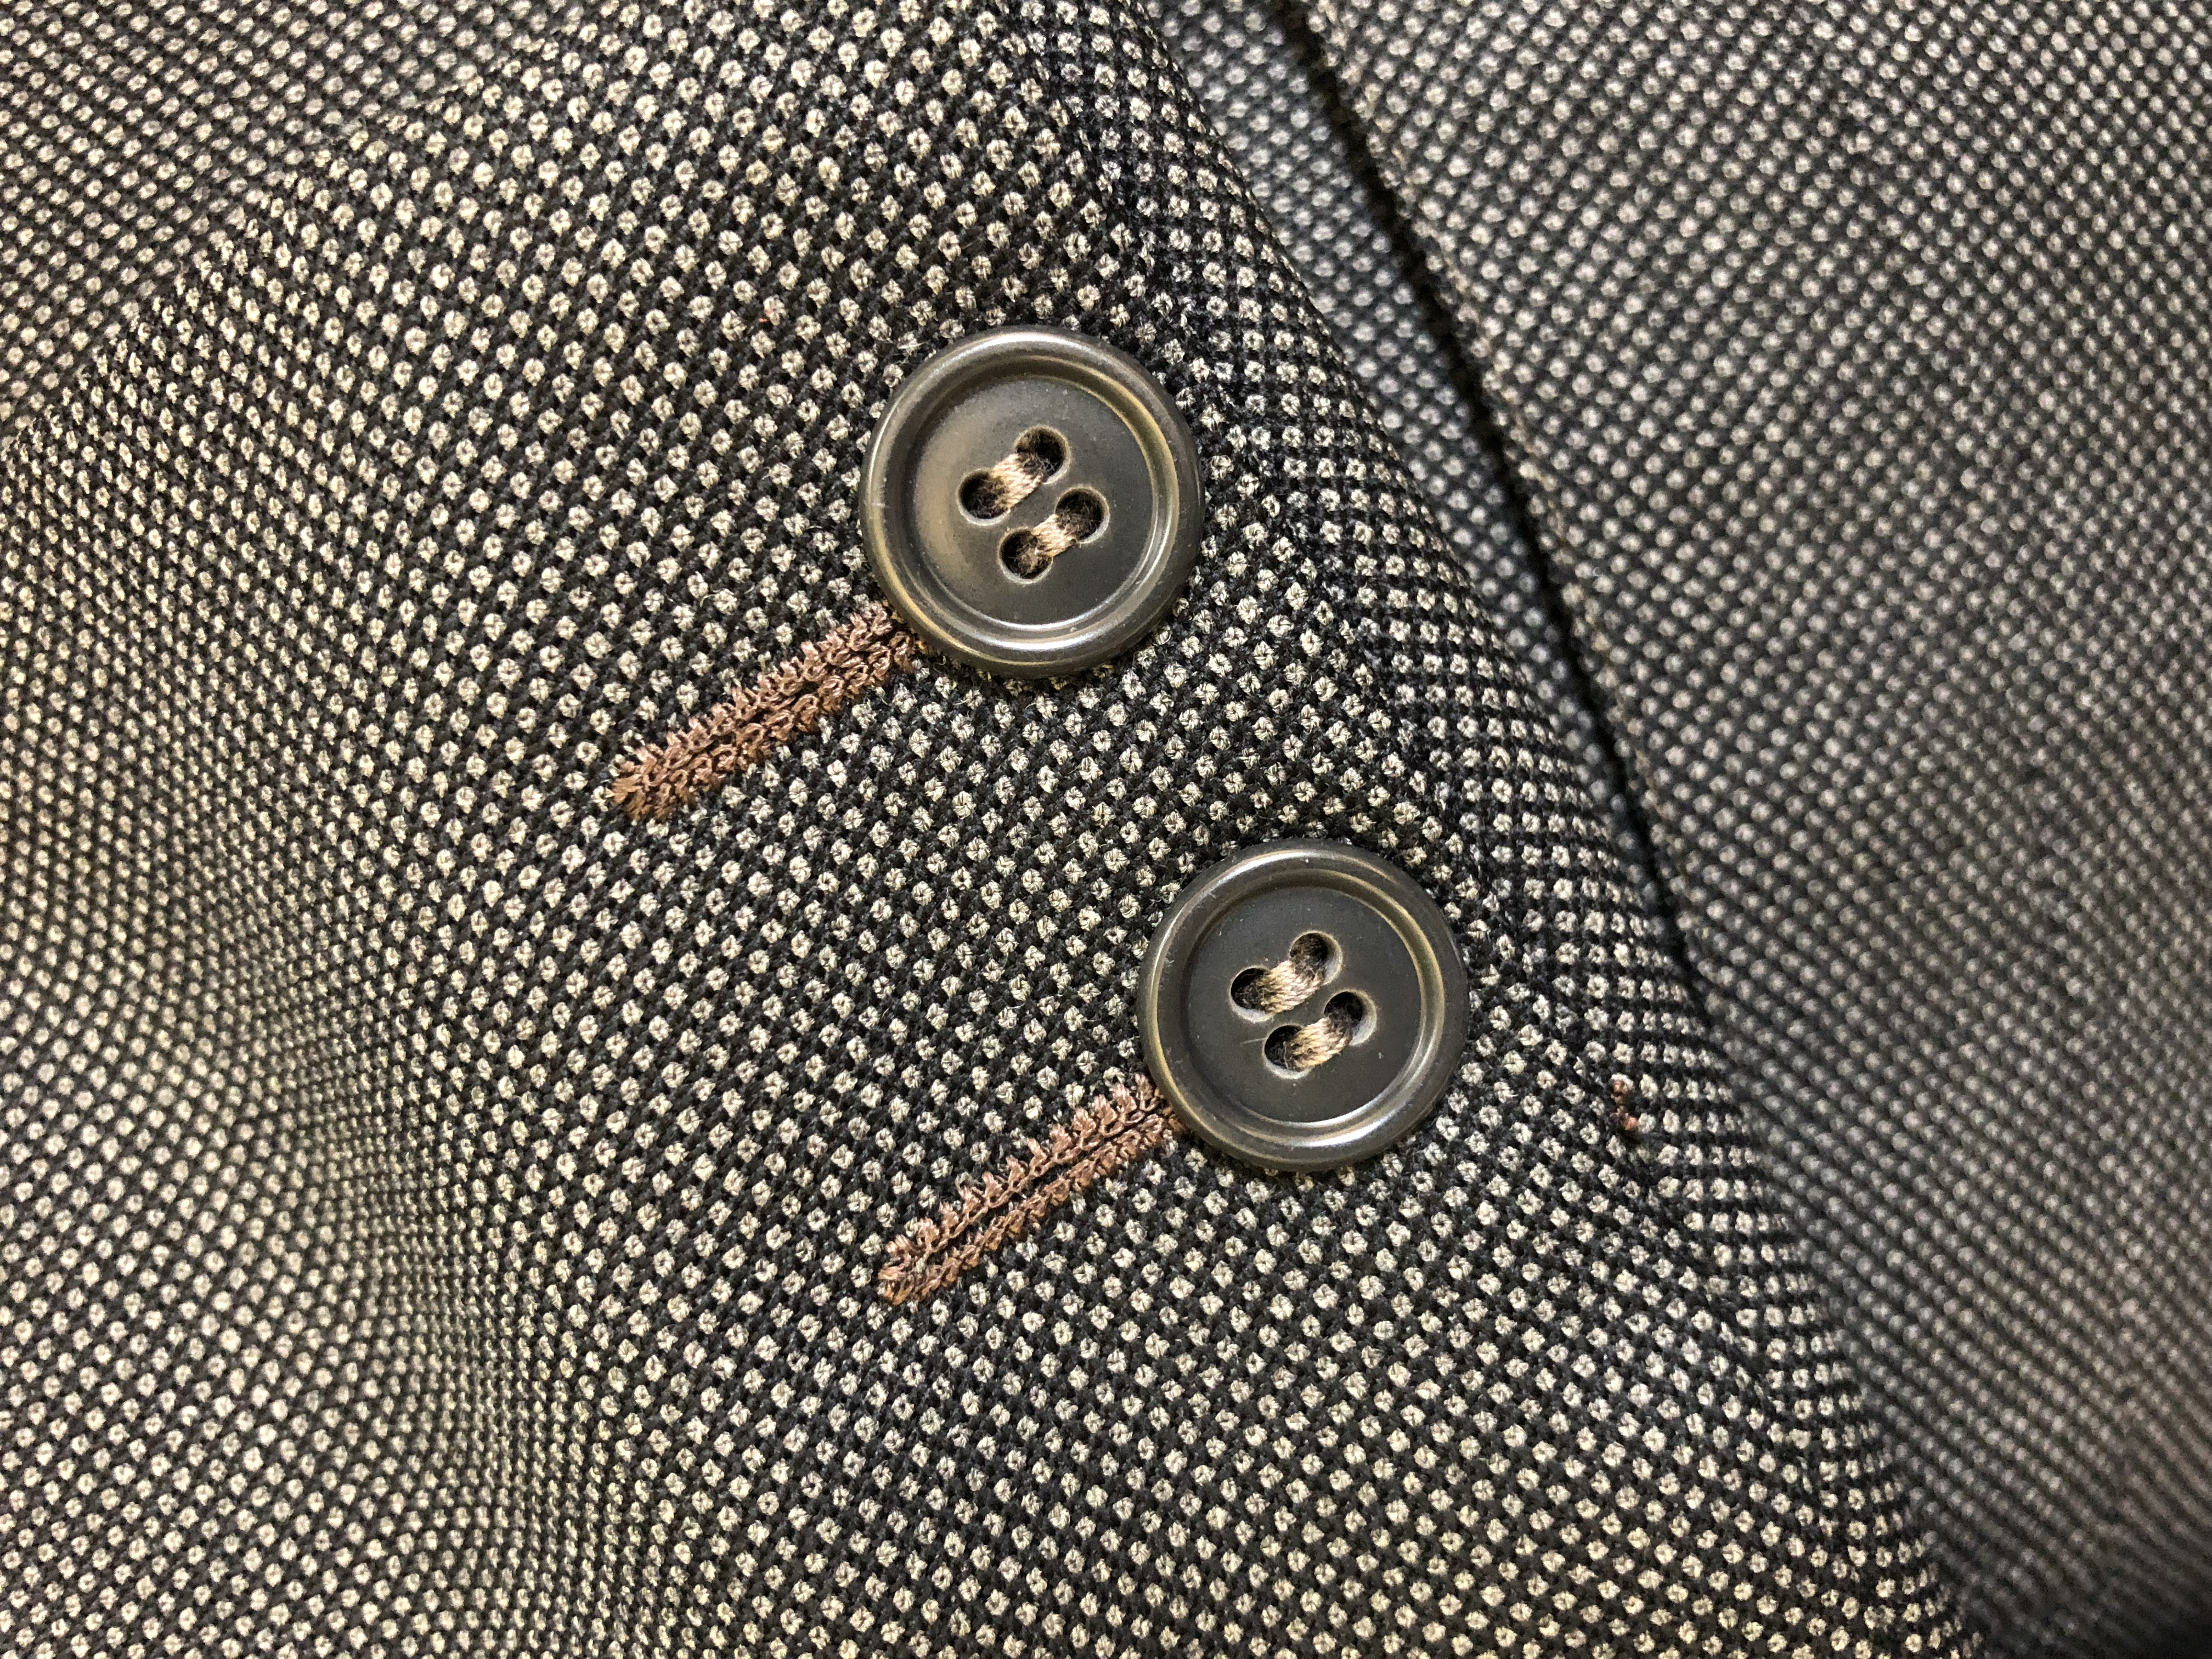 www.theGenuineGentleman.com Suit Quality Hallmarks - Dual Hole Button Stitching